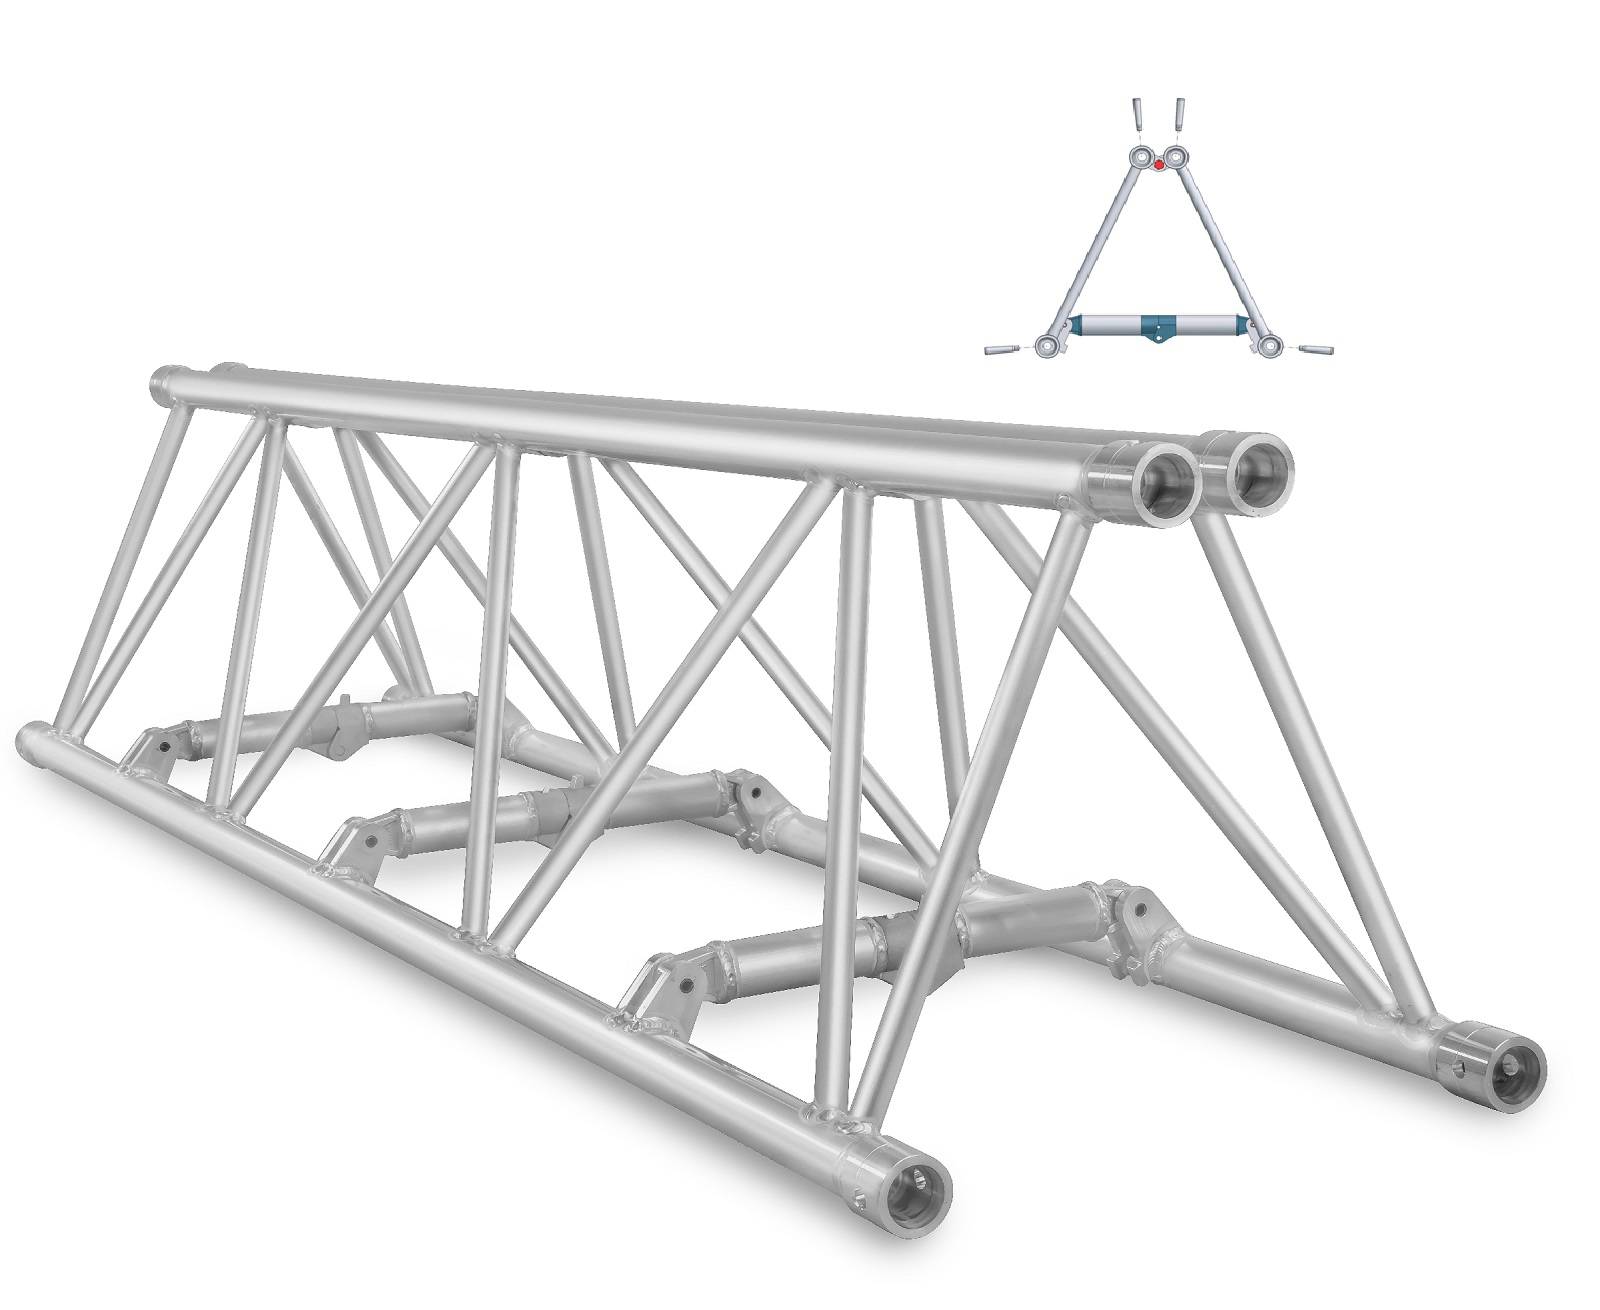 M520 - High Capacity truss range including compact folding option